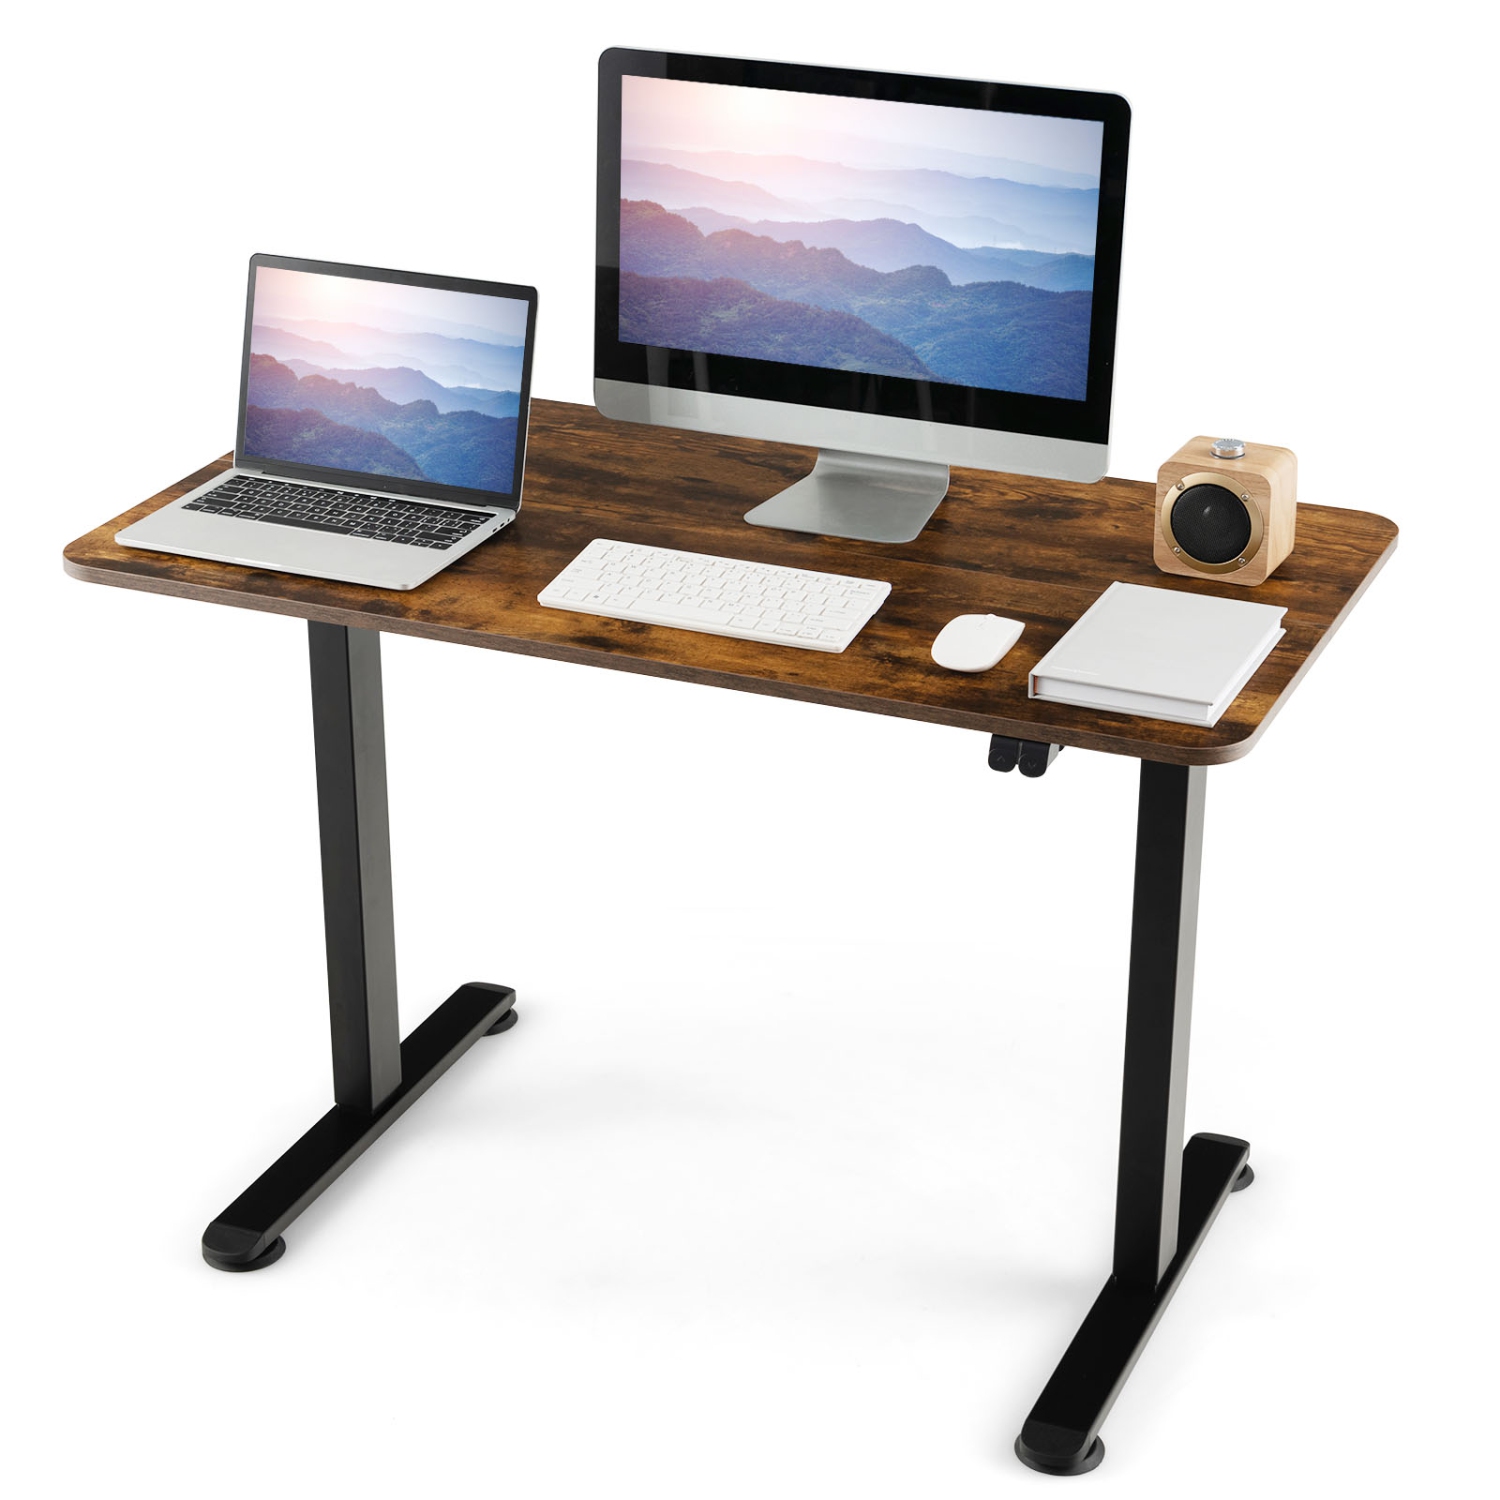 Topbuy Height Adjustable Electric Desk 44" x 24" Sit to Stand Desk w/ Splice Board Sturdy T-shaped Metal Bracket